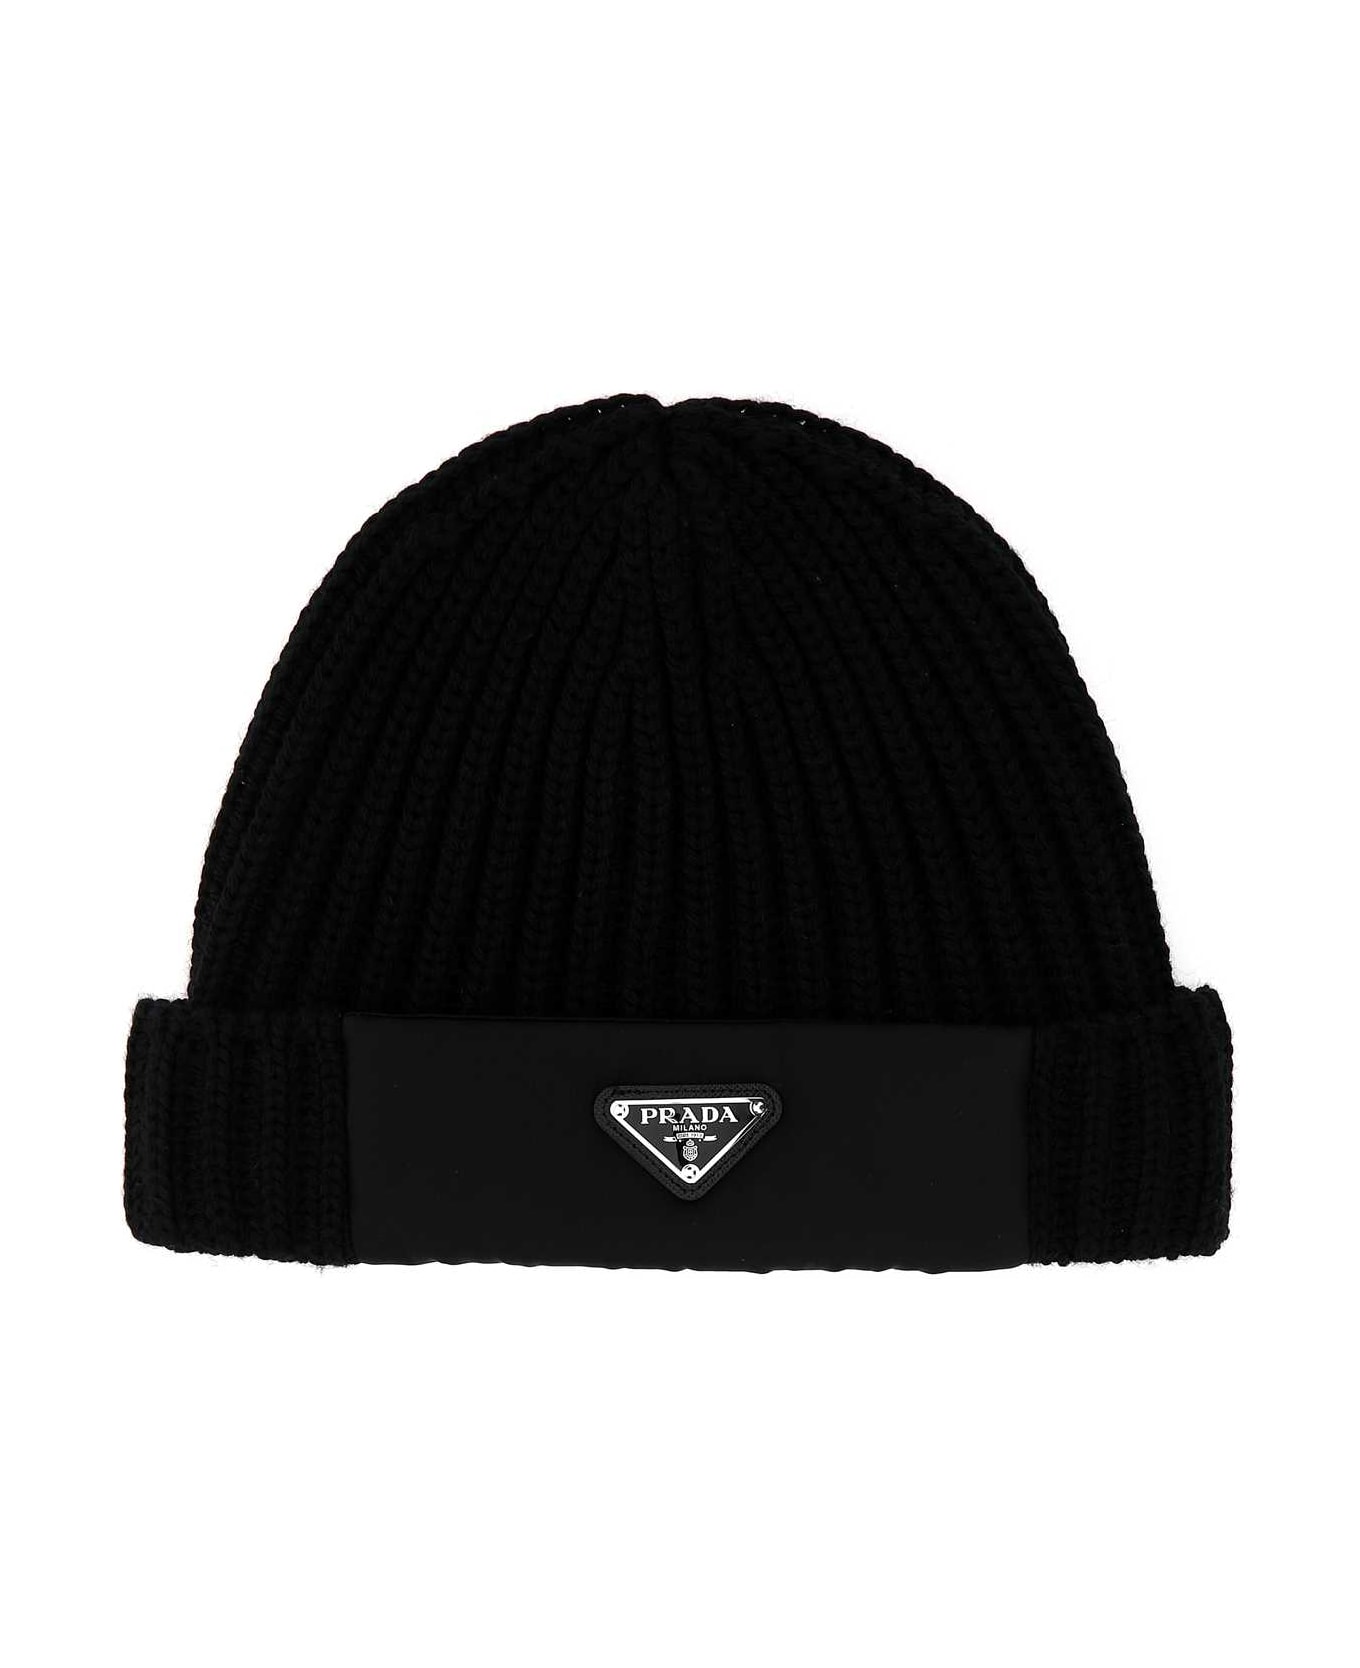 Prada Black Wool Beanie Hat - F0002 デジタルアクセサリー